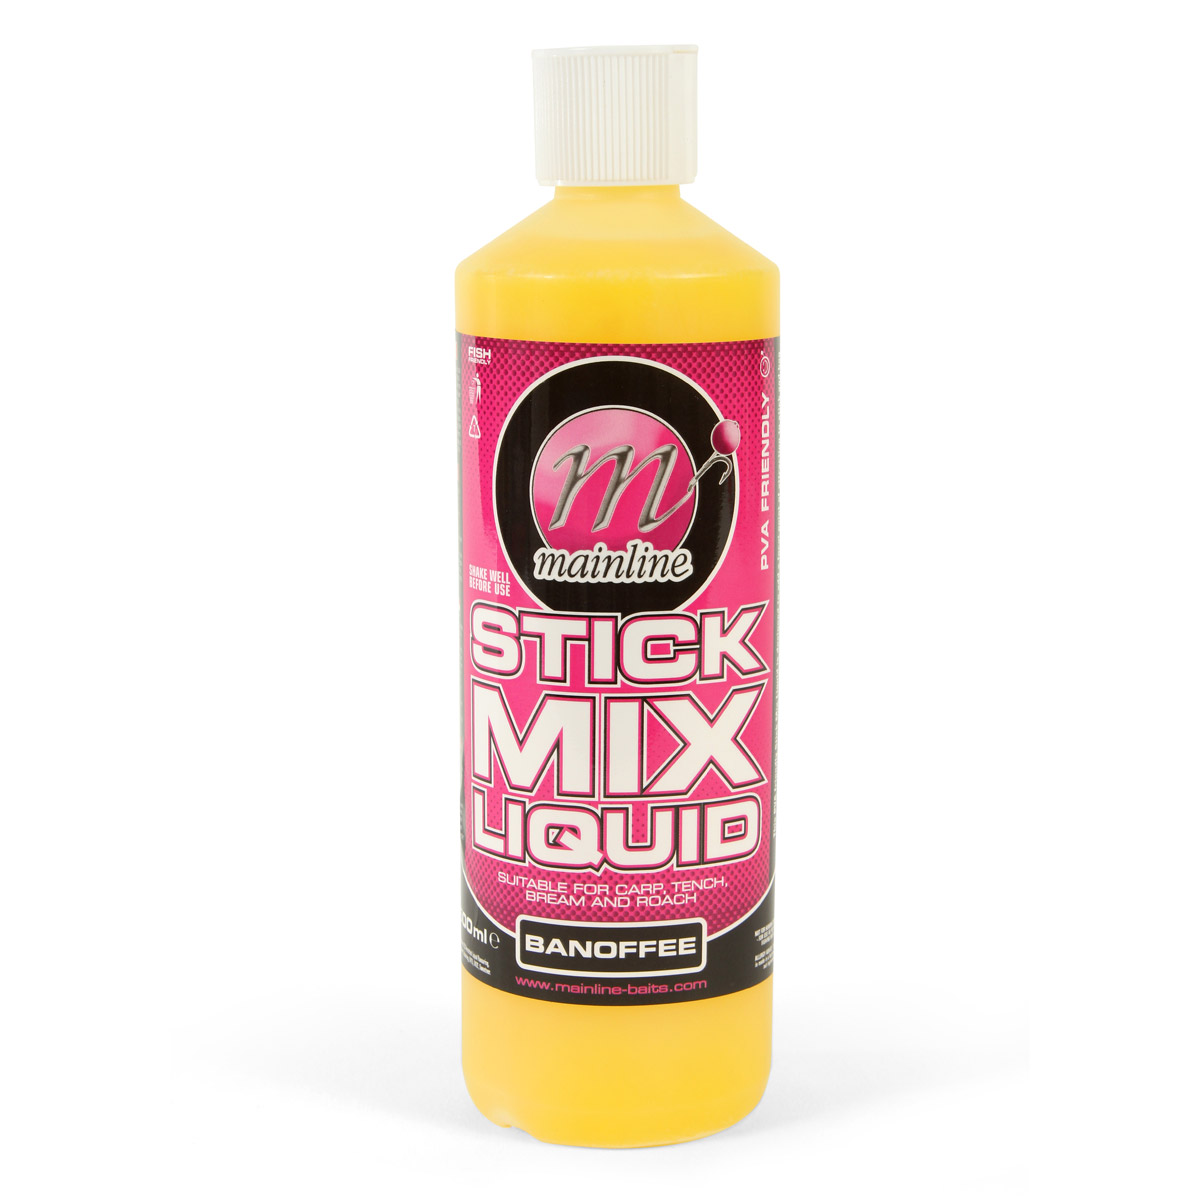 Mainline Pro Activ Stick Mix Liquid-Banoffee